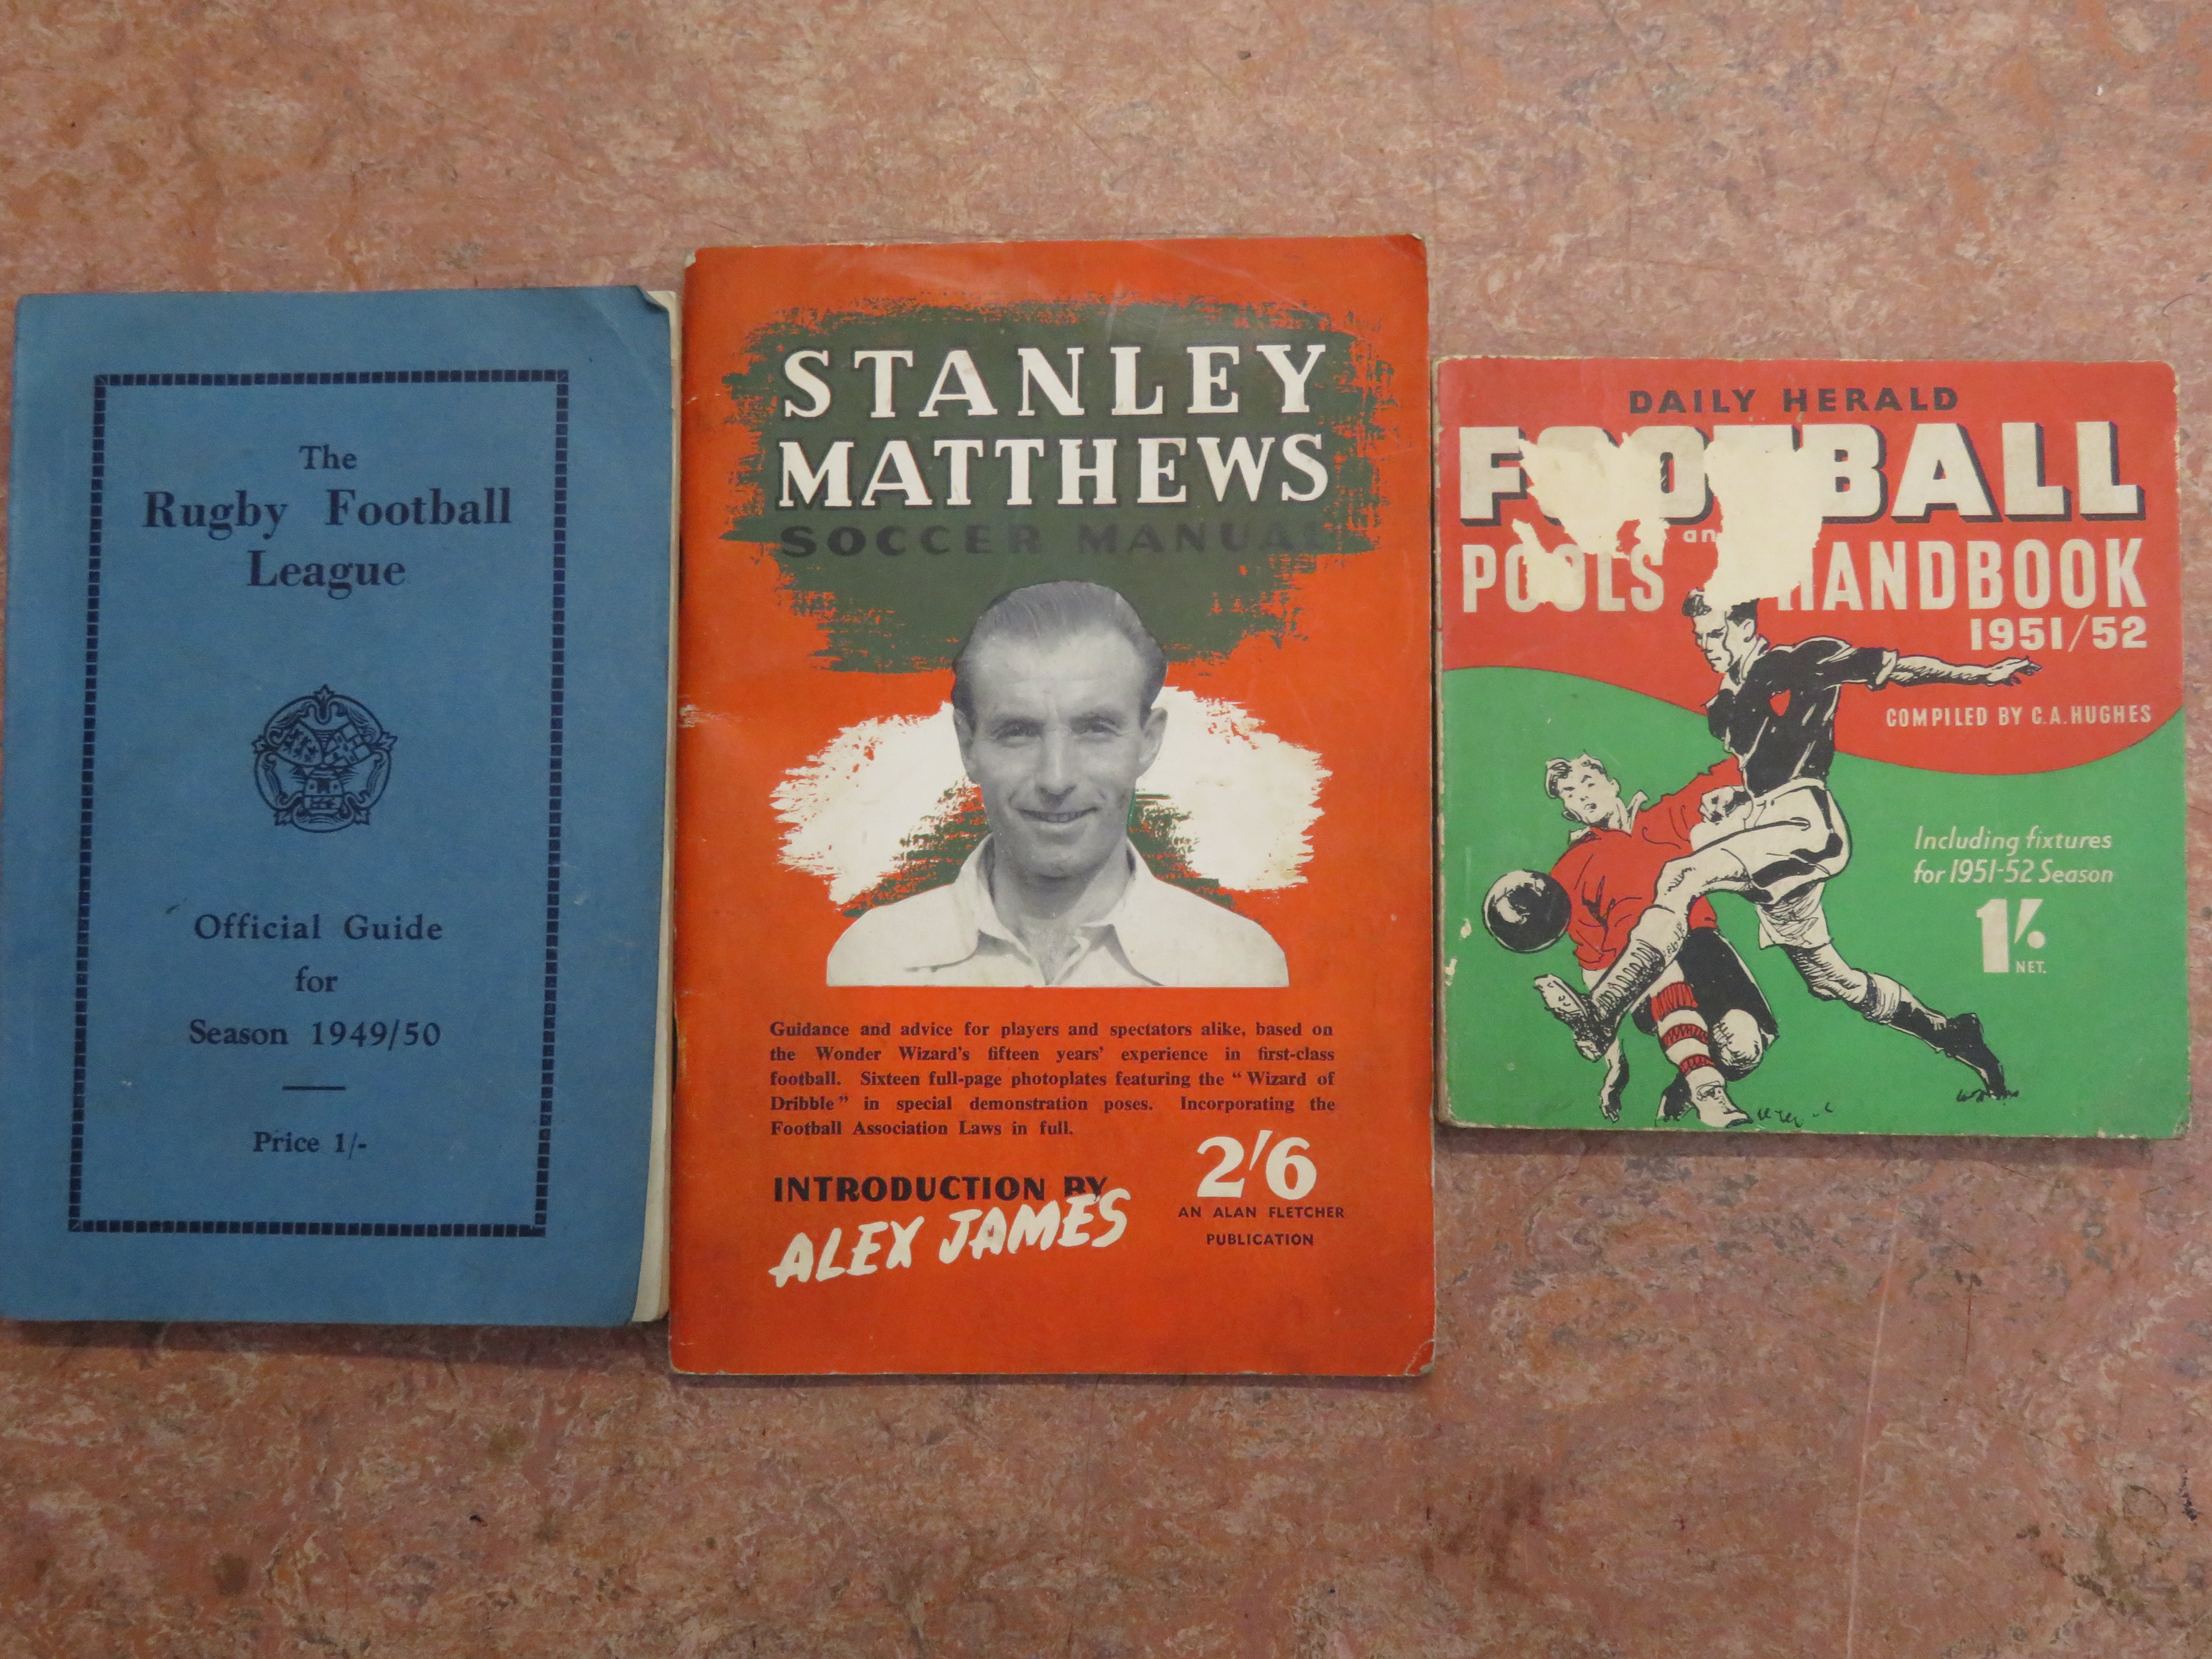 Stanley Matthews soccer manual, rugby football lea